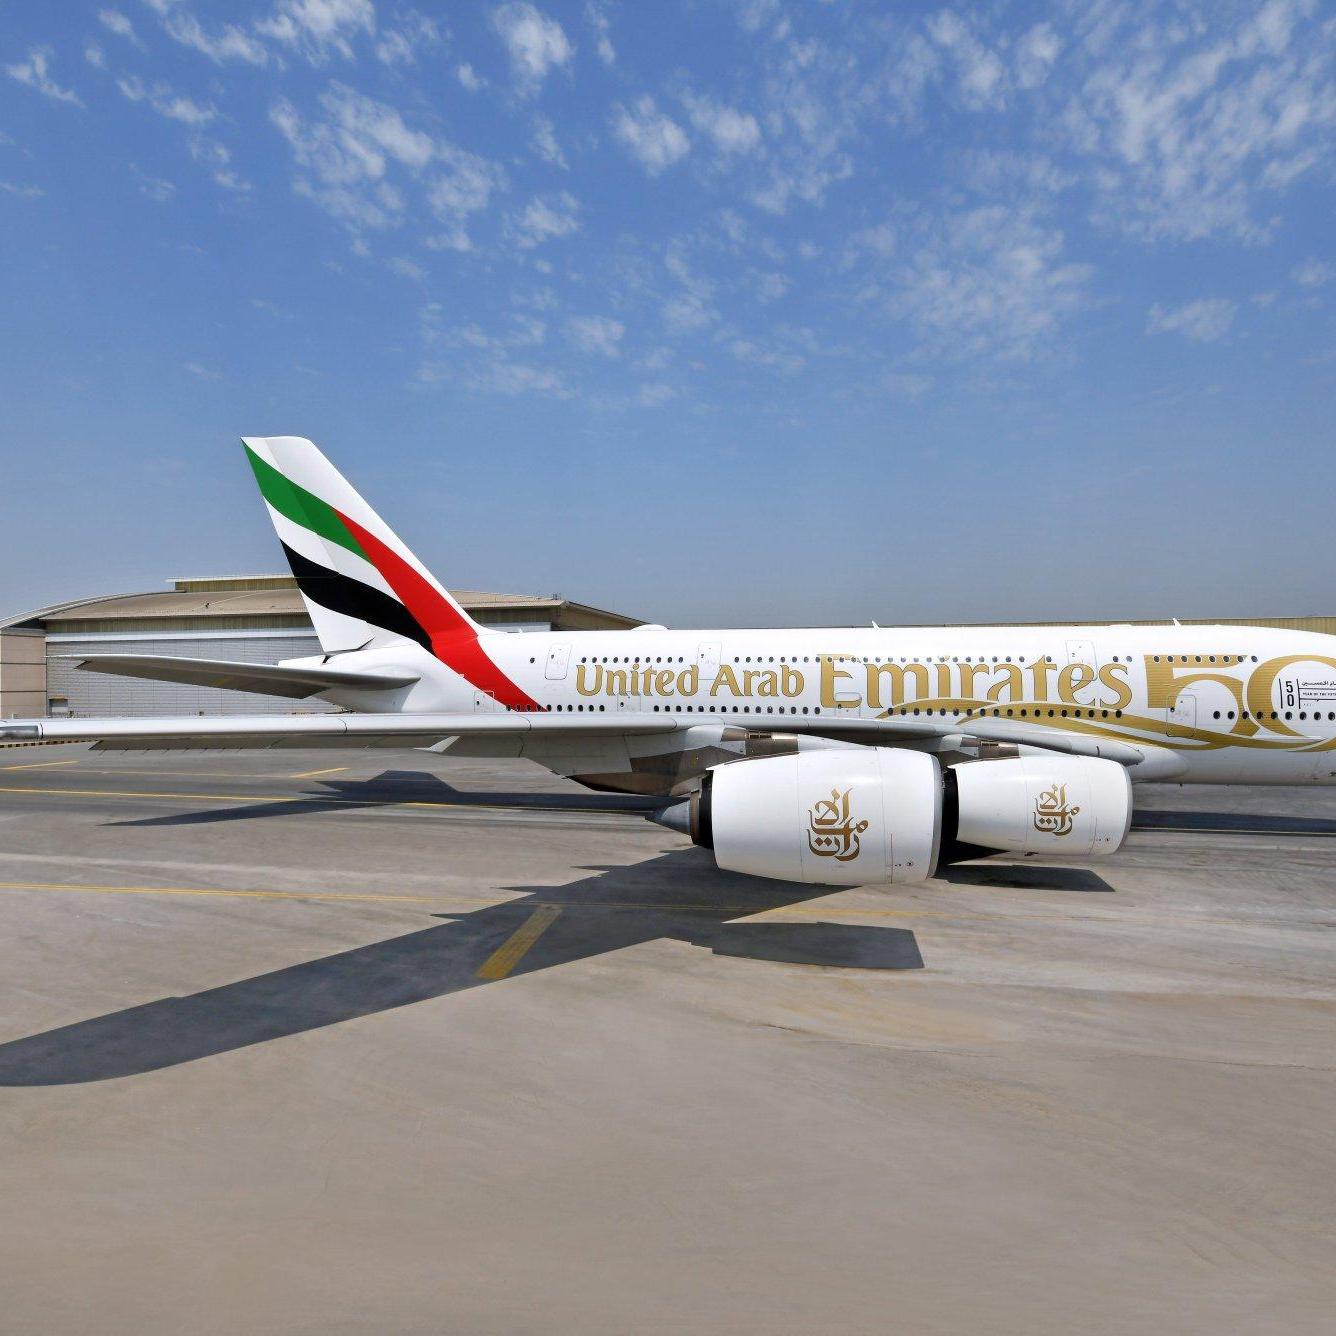 Dubai: Emirates airline generates 'most positive buzz' in 2021: YouGov